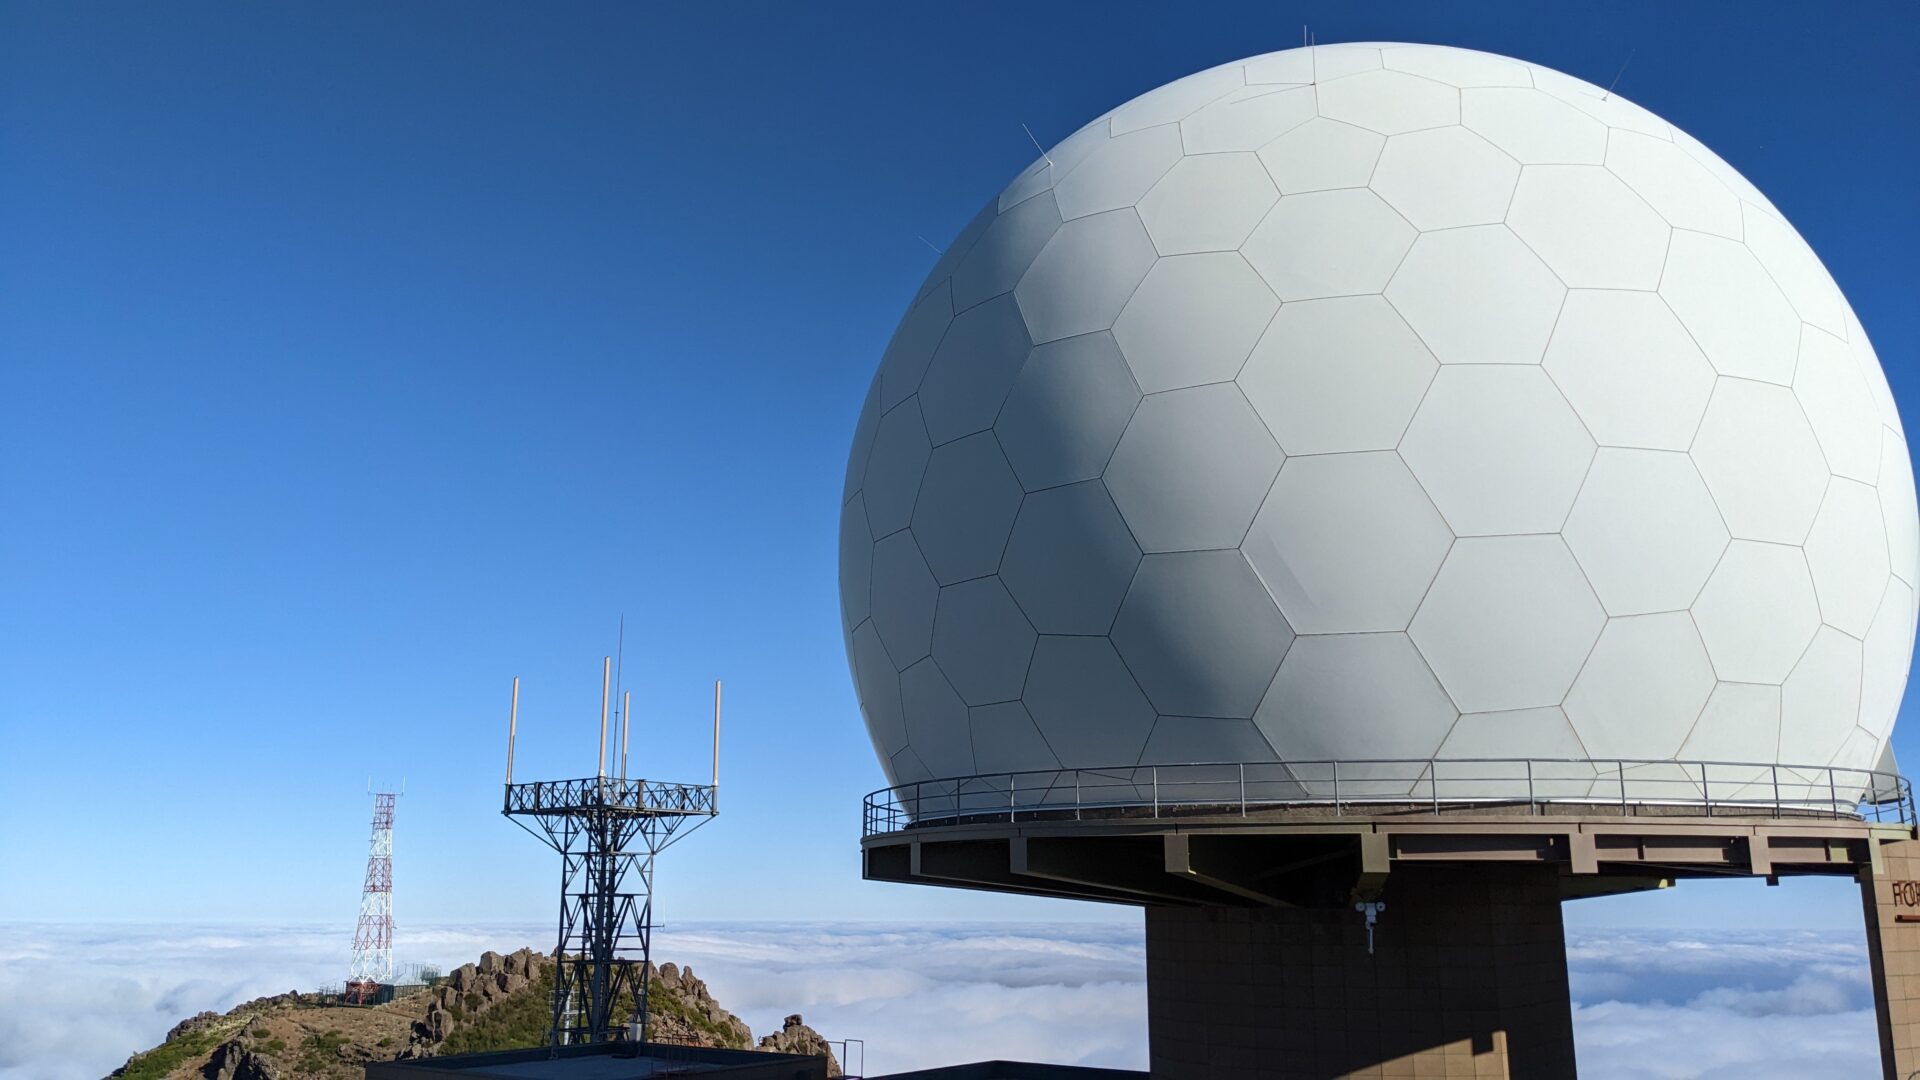 Blue sky with radio towers and radar dome